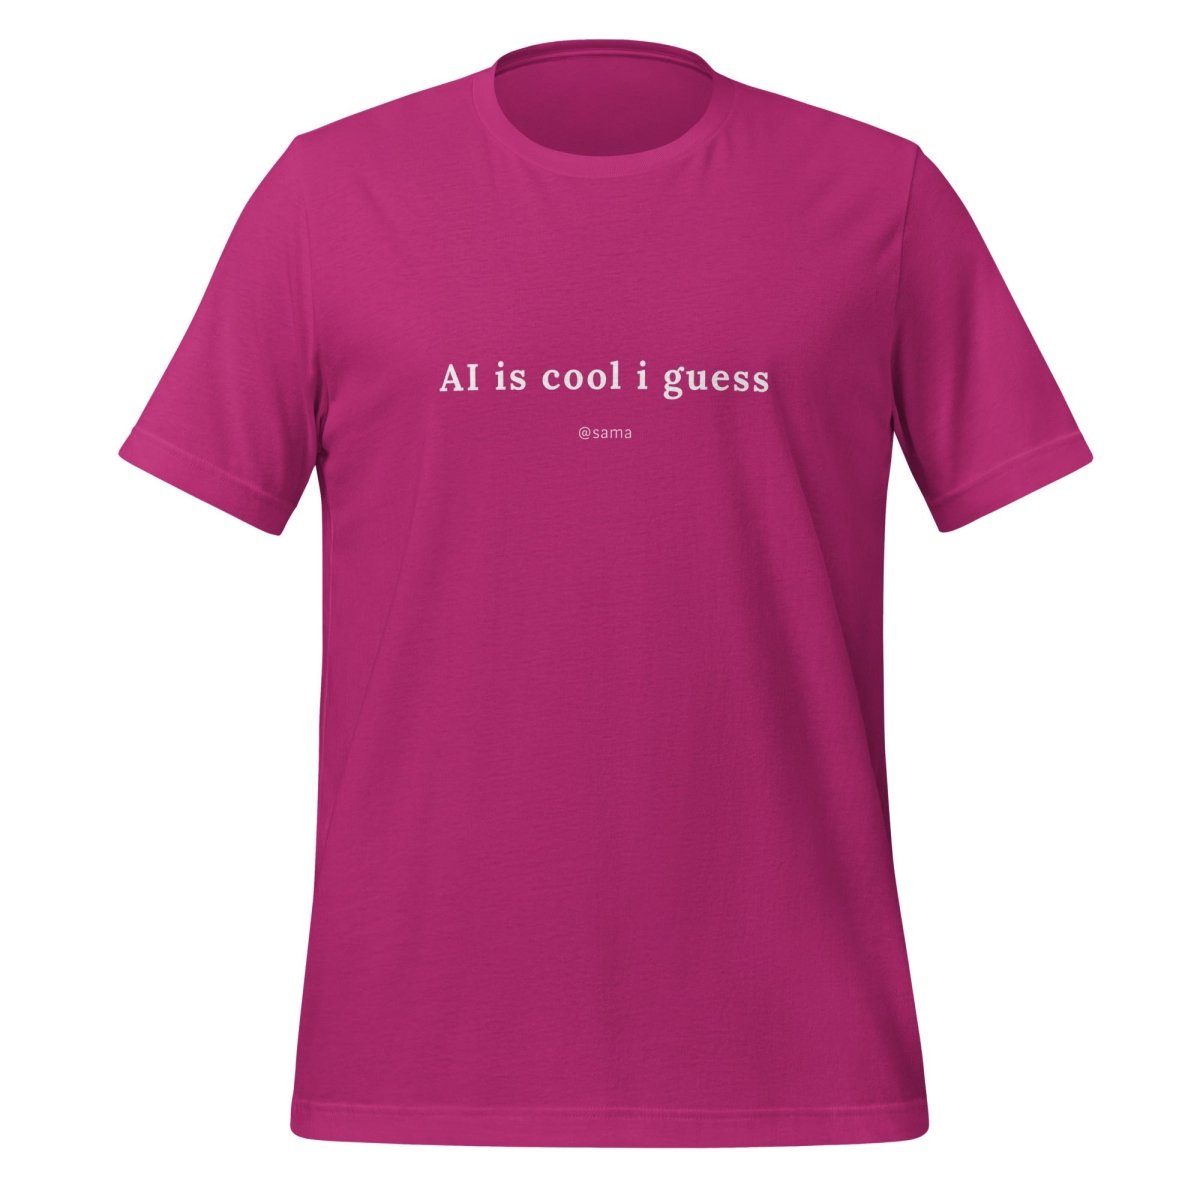 AI is cool i guess [@sama] T - Shirt (unisex) - Berry - AI Store